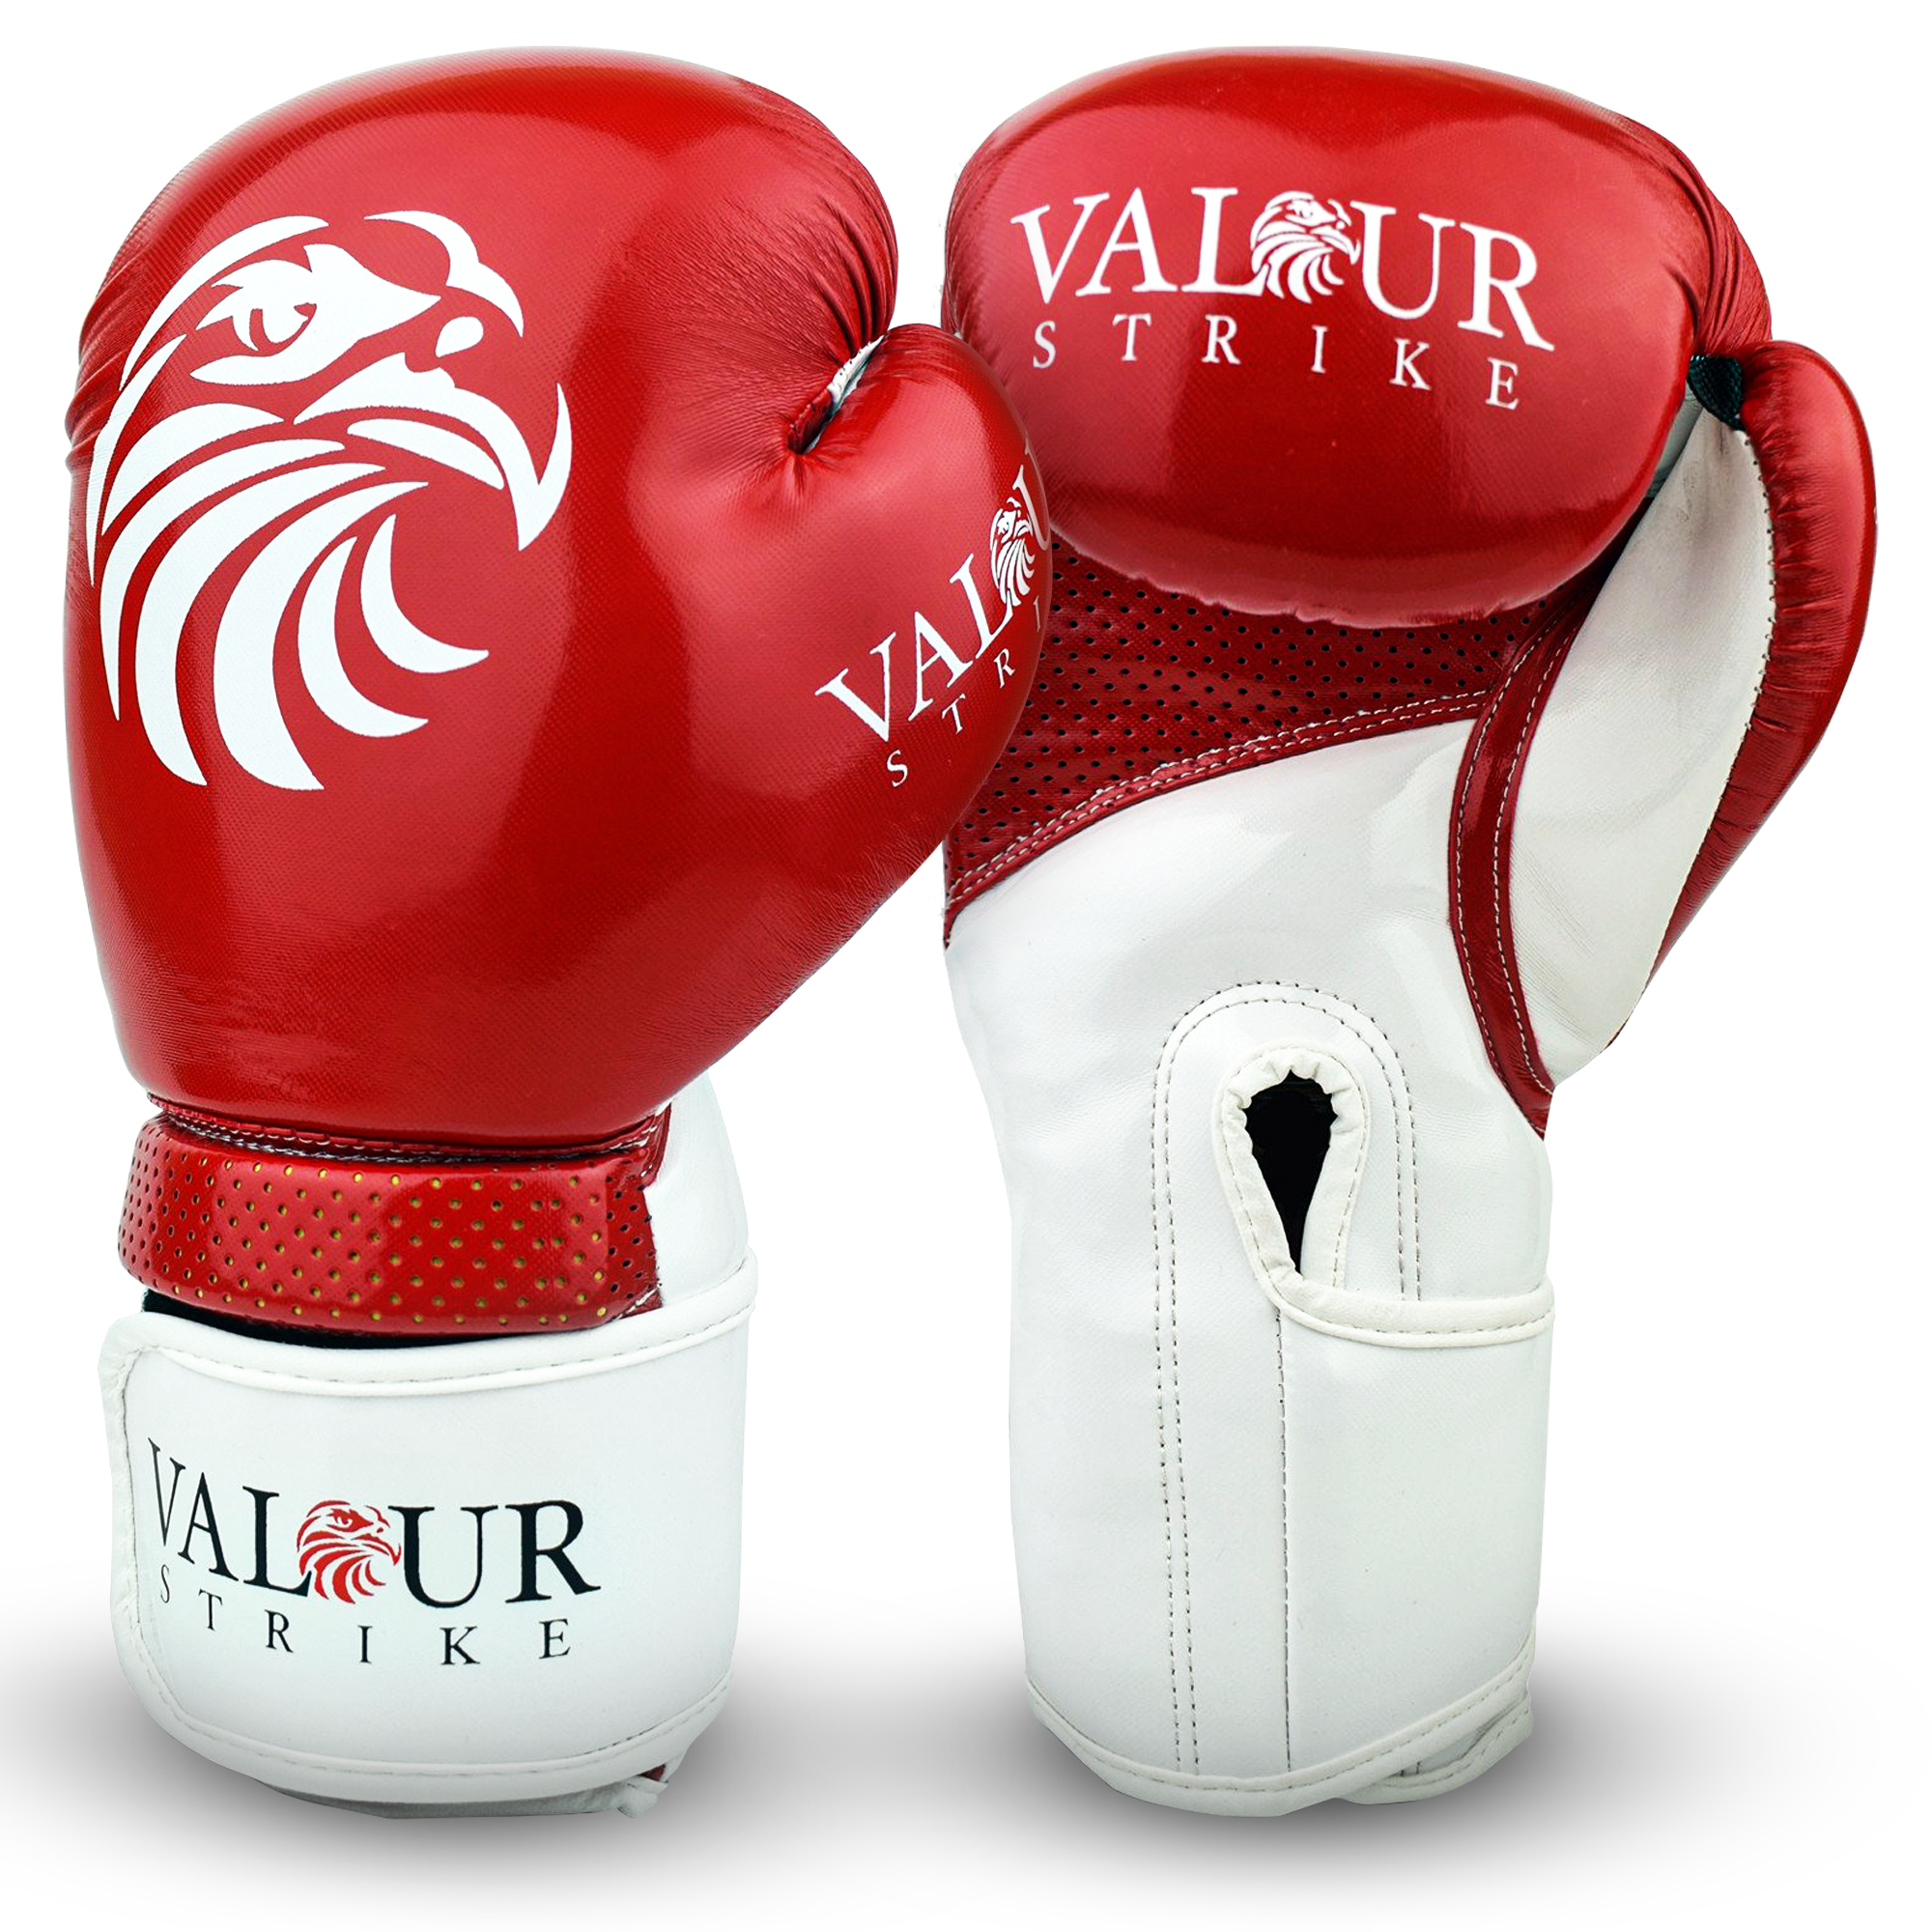 Valour Strike Boxing Gloves for Men Women Ladies Juniors, Set in Ounce  16oz 14oz 12oz 10oz 8oz for Pro Sparring Kickboxing MMA Muay Thai or  Boxercise Training Workout